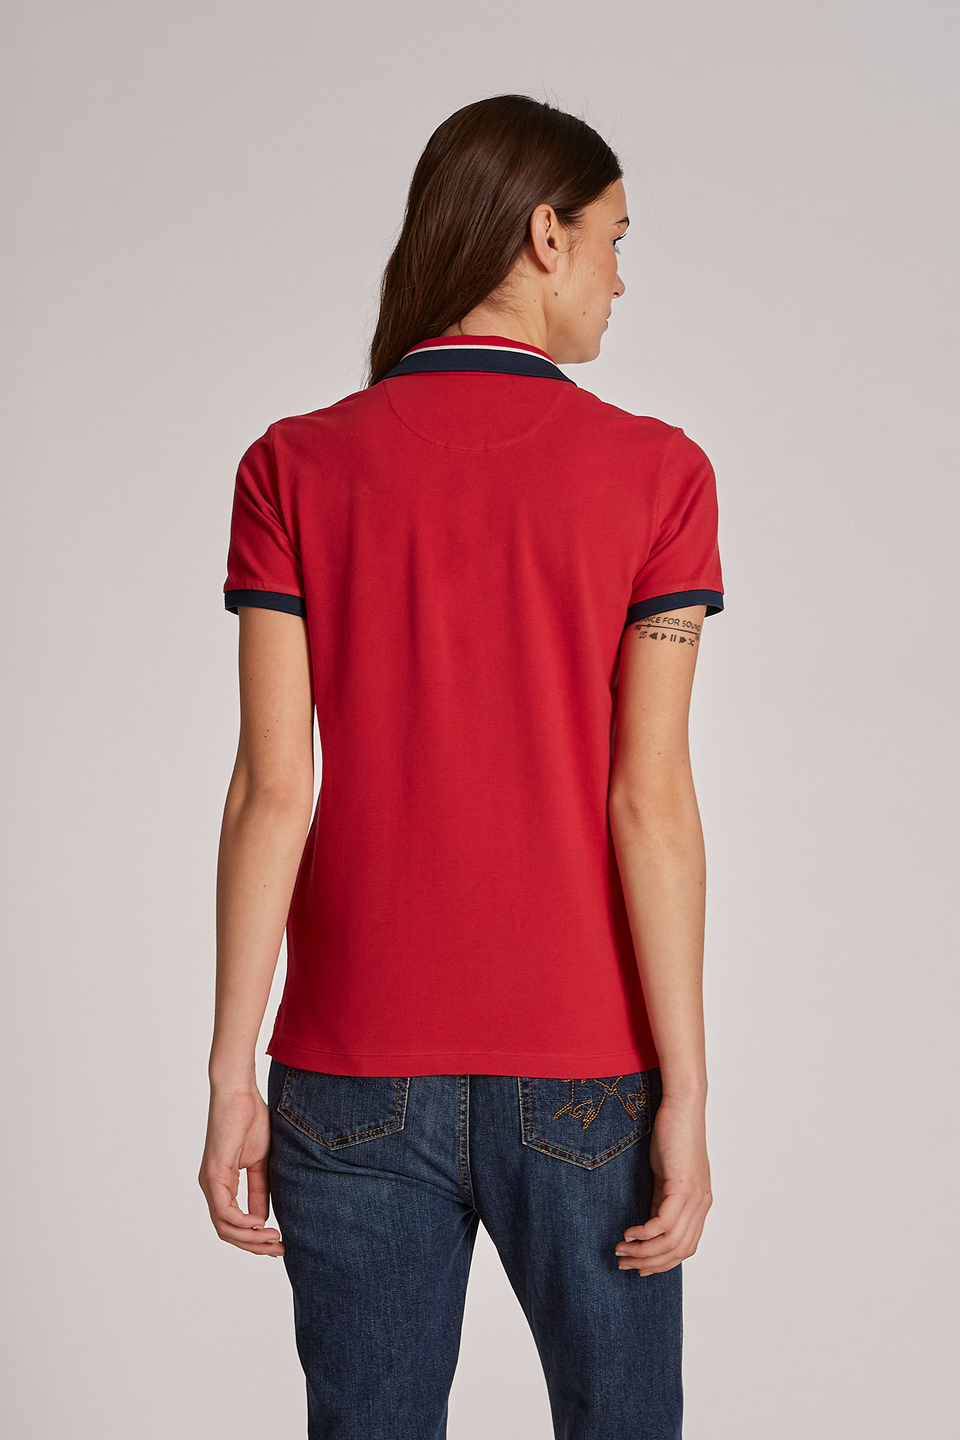 Damen-Poloshirt mit kurzem Arm aus 100 % Baumwolle im Regular Fit - La Martina - Official Online Shop